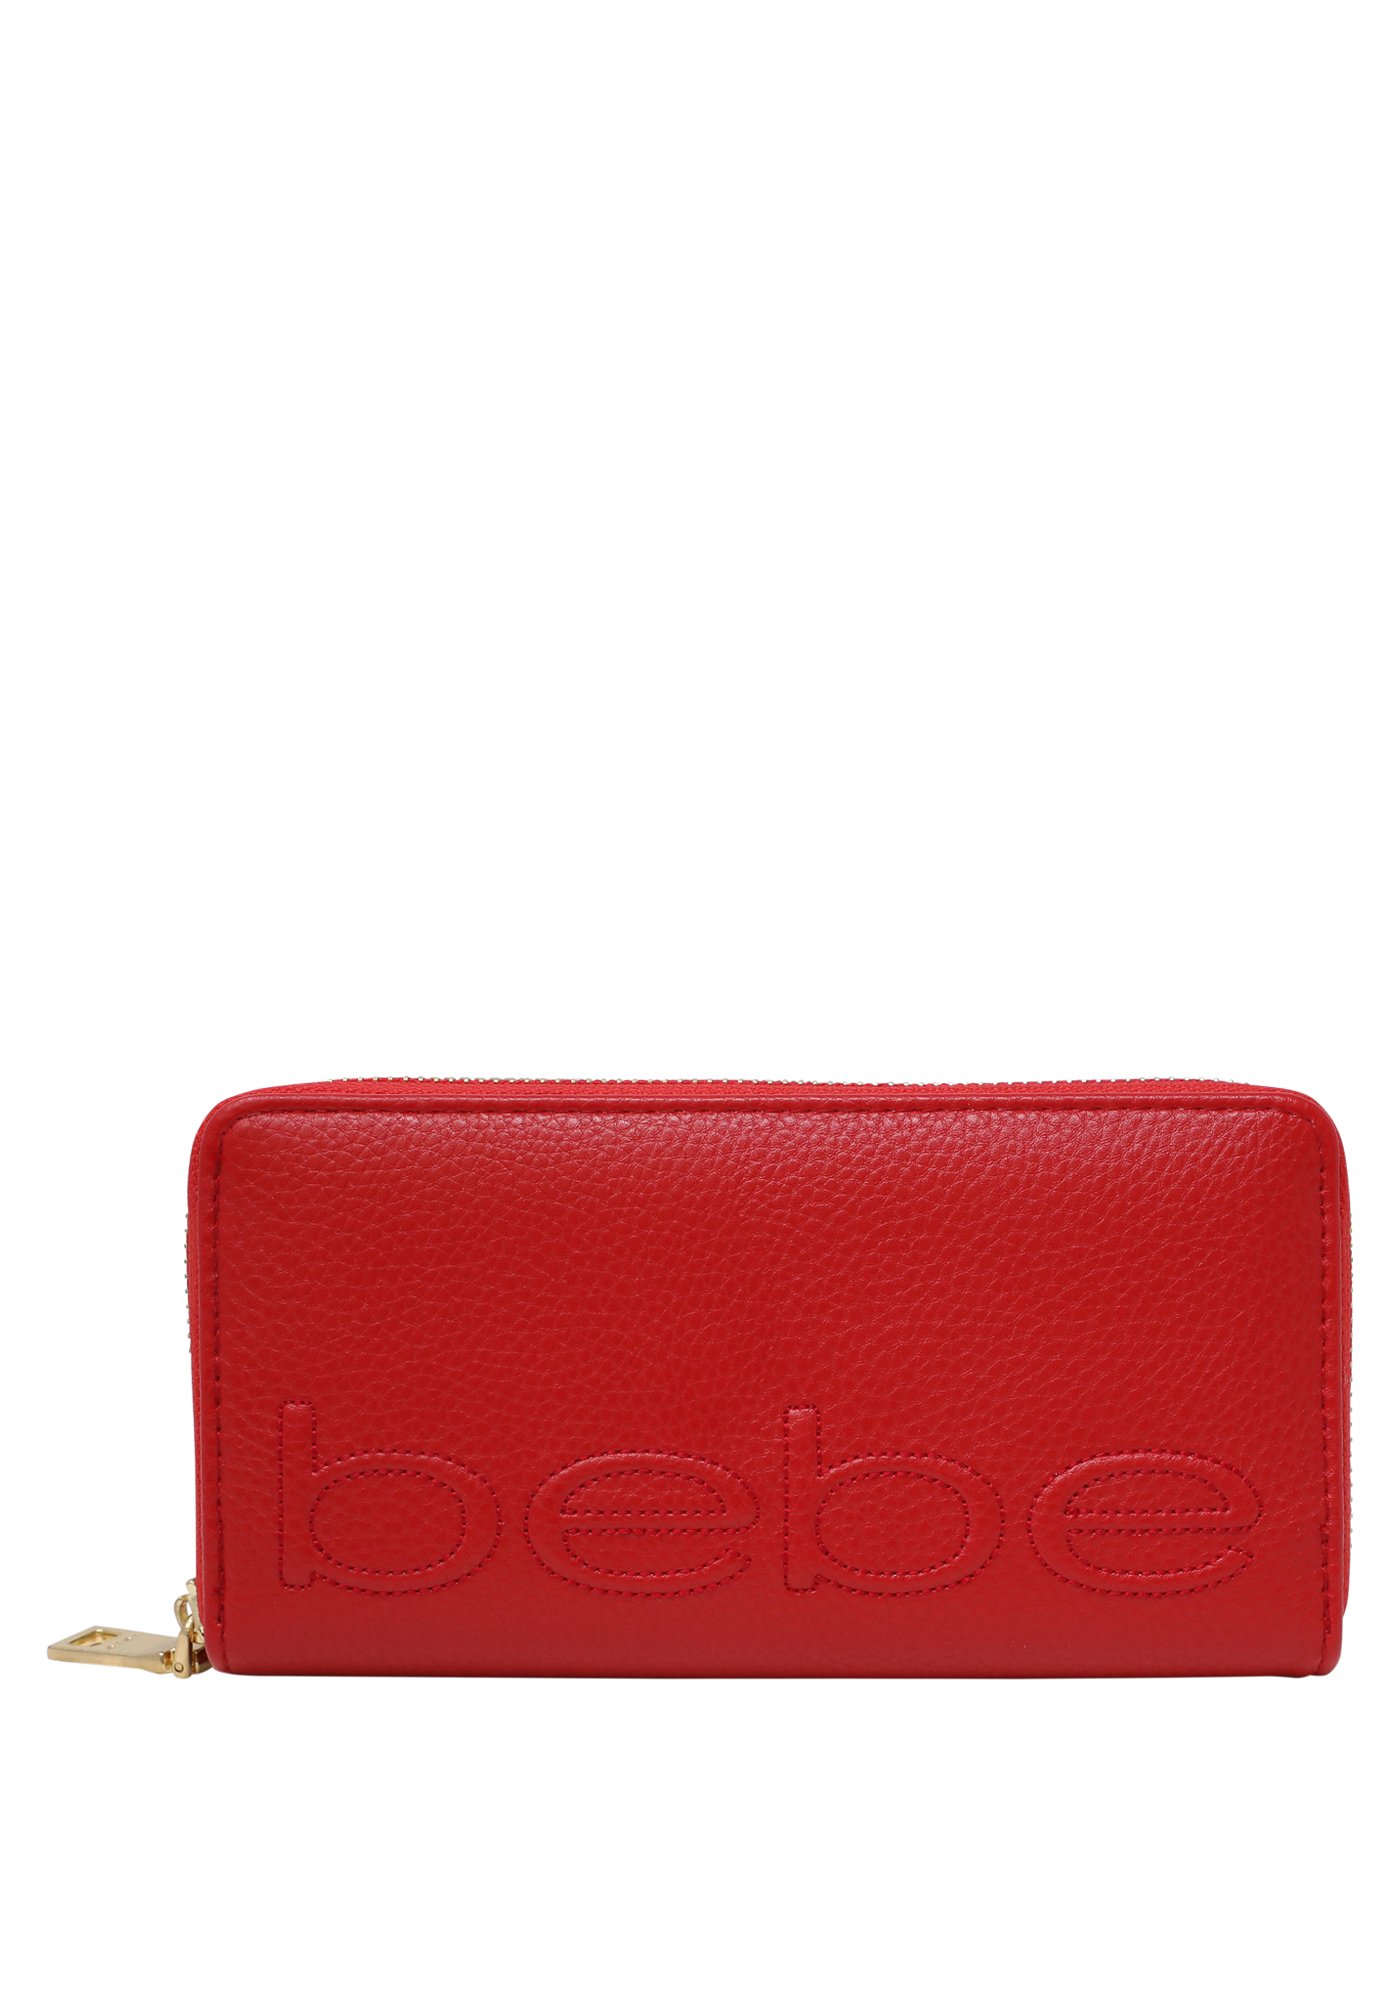 Bebe Women's Bailey Zip Around Wallet, Size OS in Red Polyurethane